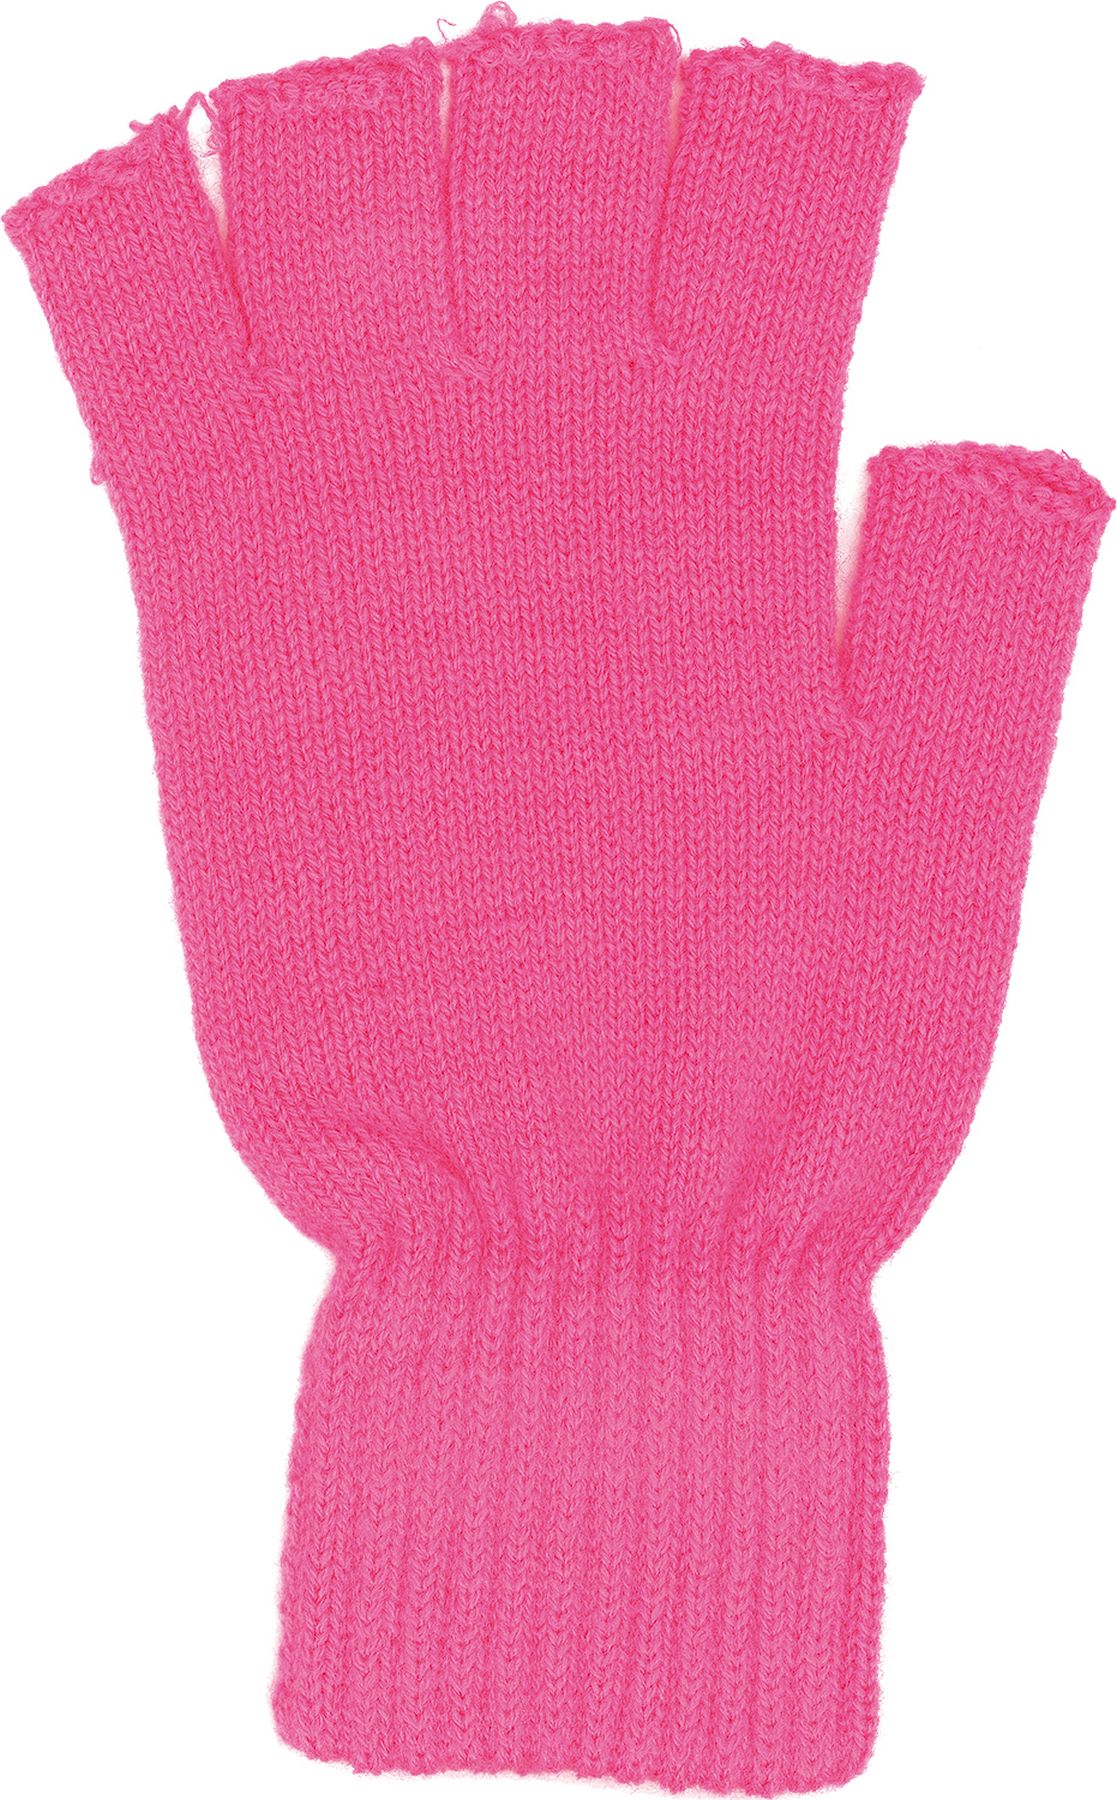 Gloves fingerless, neon-pink